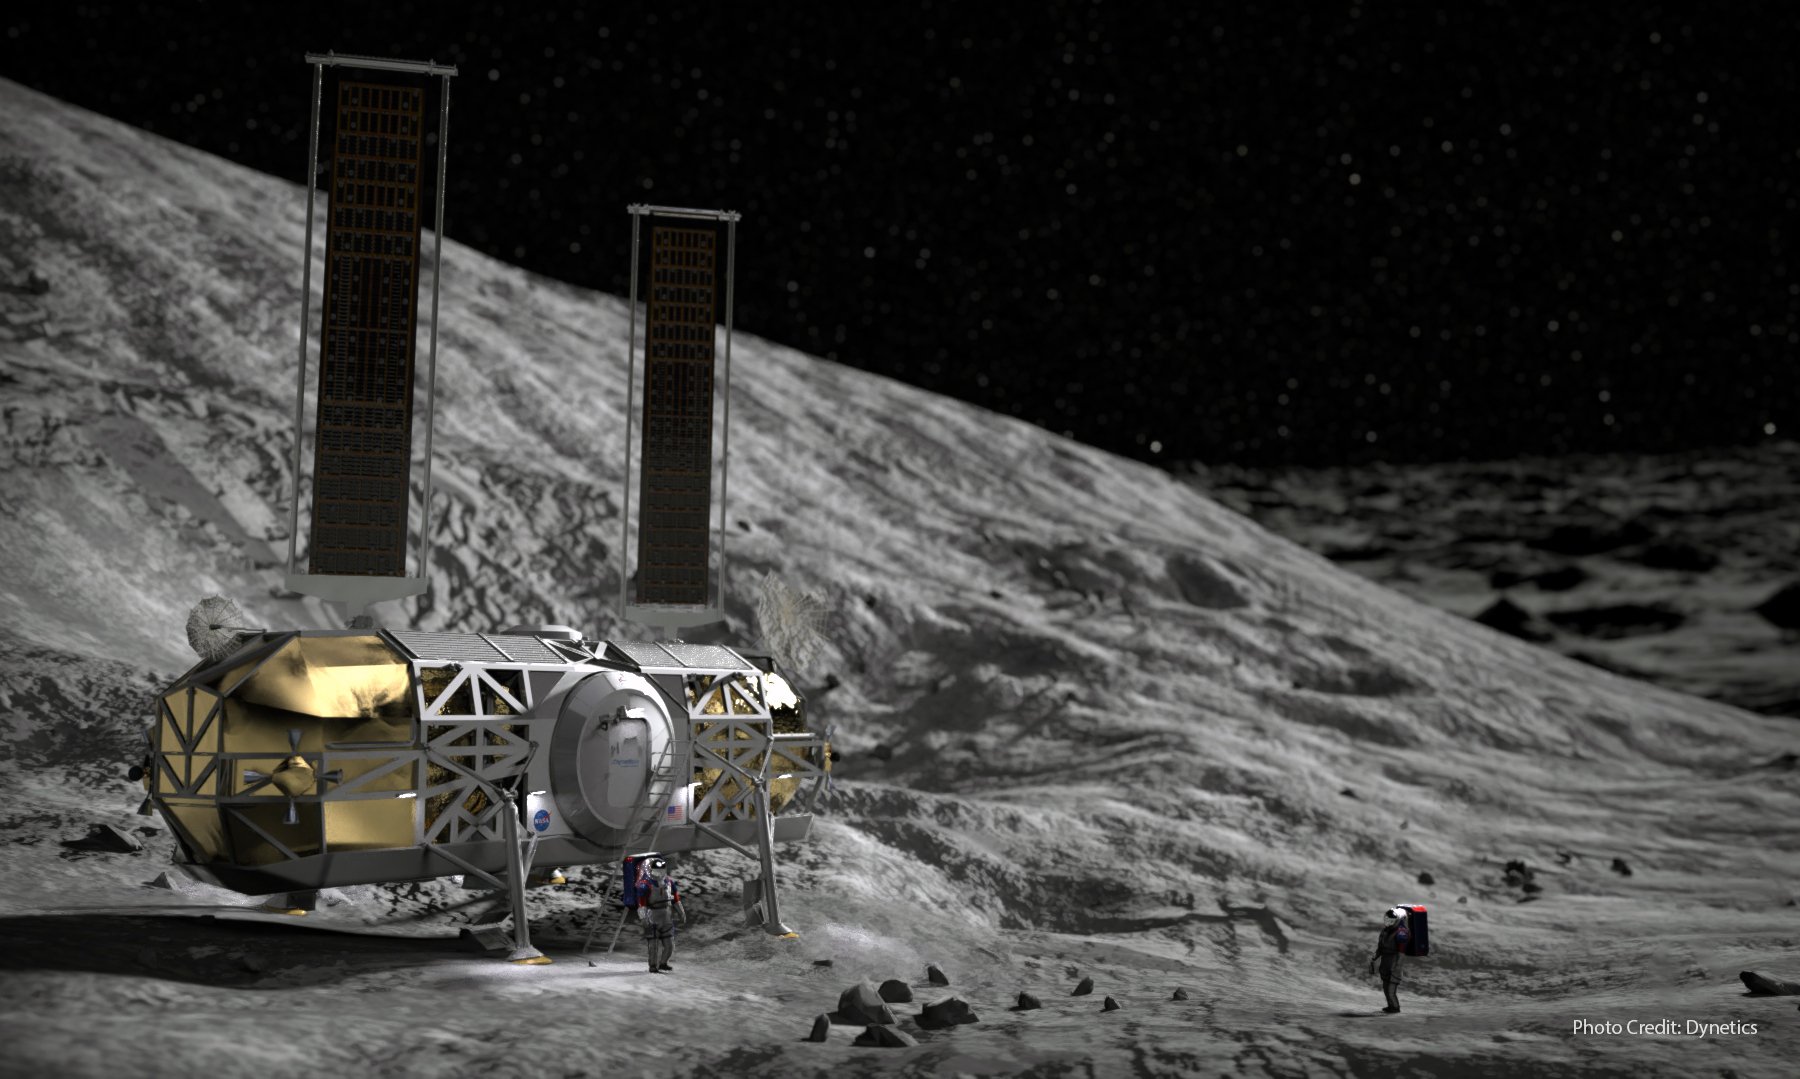 Northrop Grumman, following Lockheed Martin and Blue Origin, has applied to build a lunar module for NASA